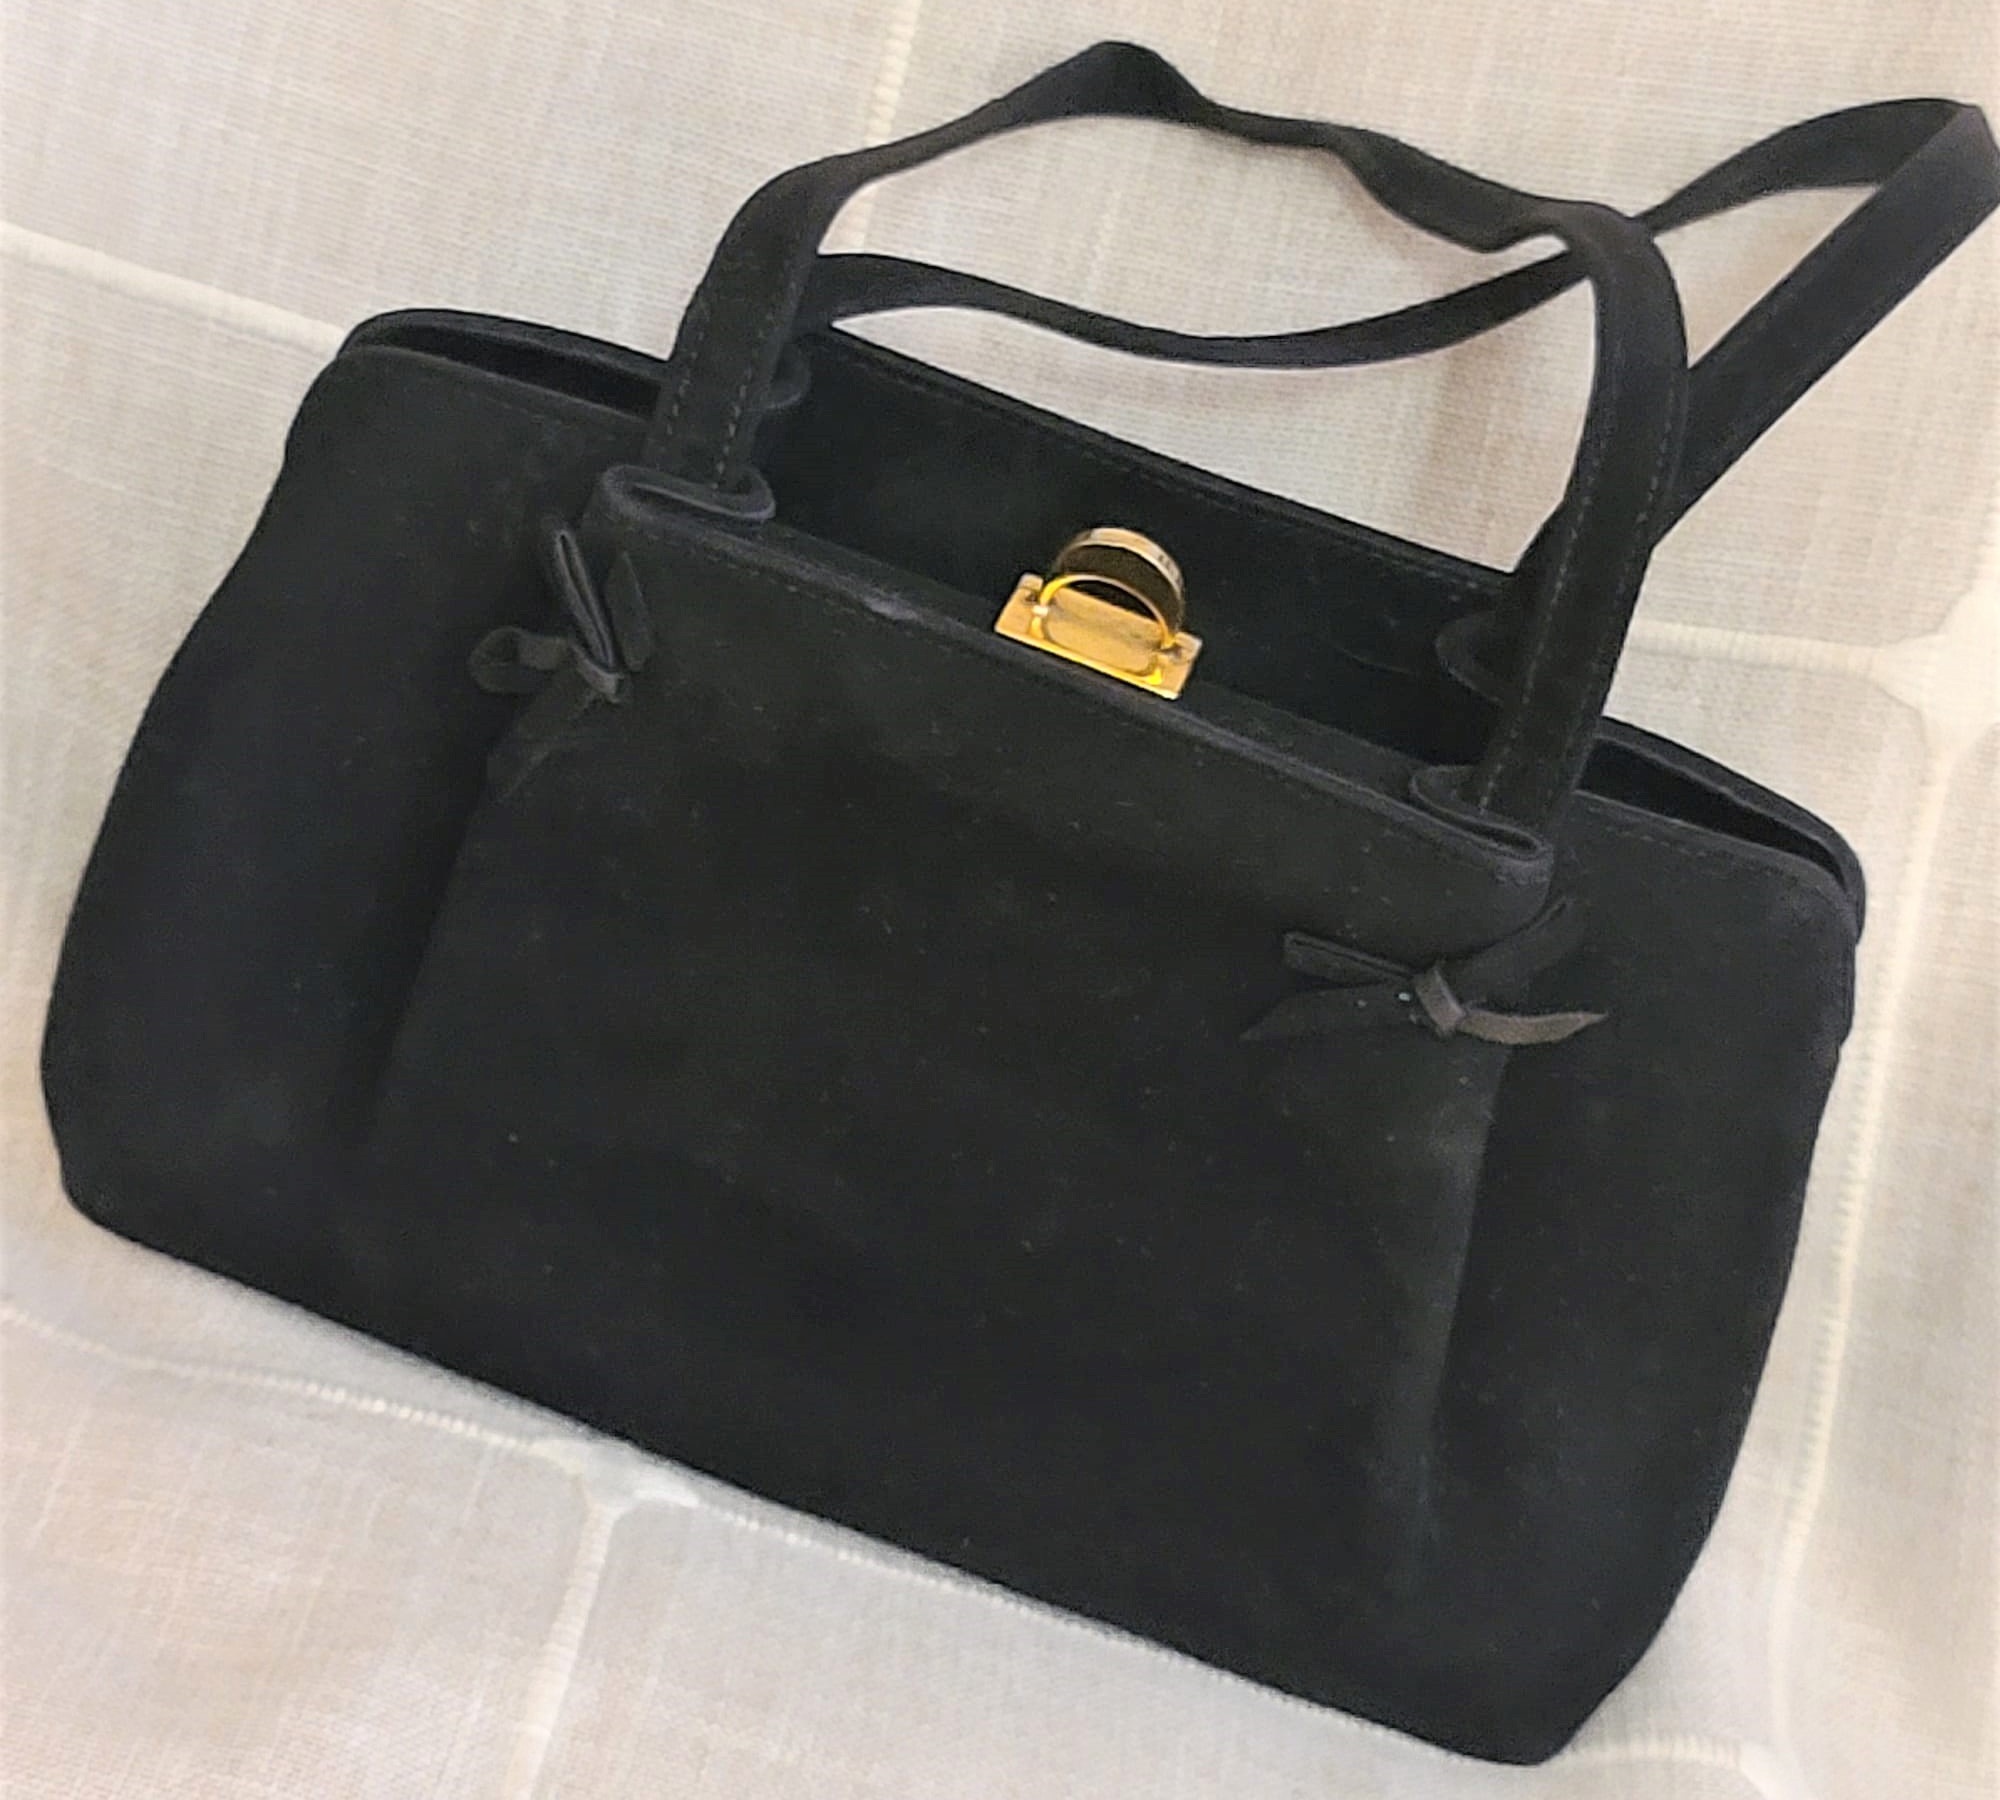 Black velveteen handbag w 2 top handles, multi compartment